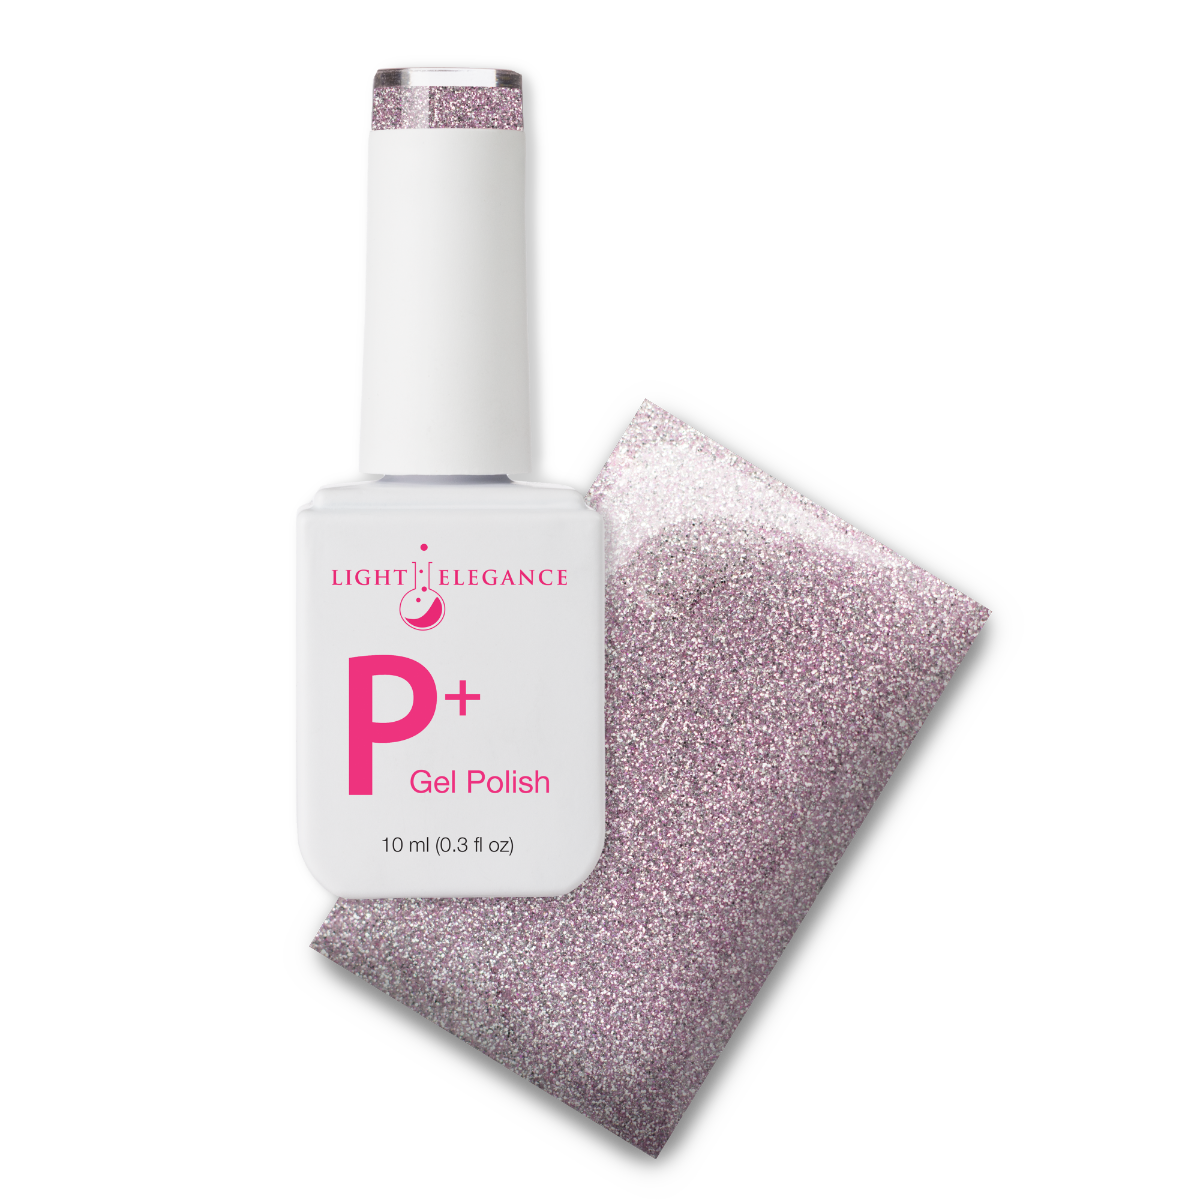 Light Elegance P+ Soak Off Glitter Gel - All Eyes on Me :: New Packaging - Creata Beauty - Professional Beauty Products